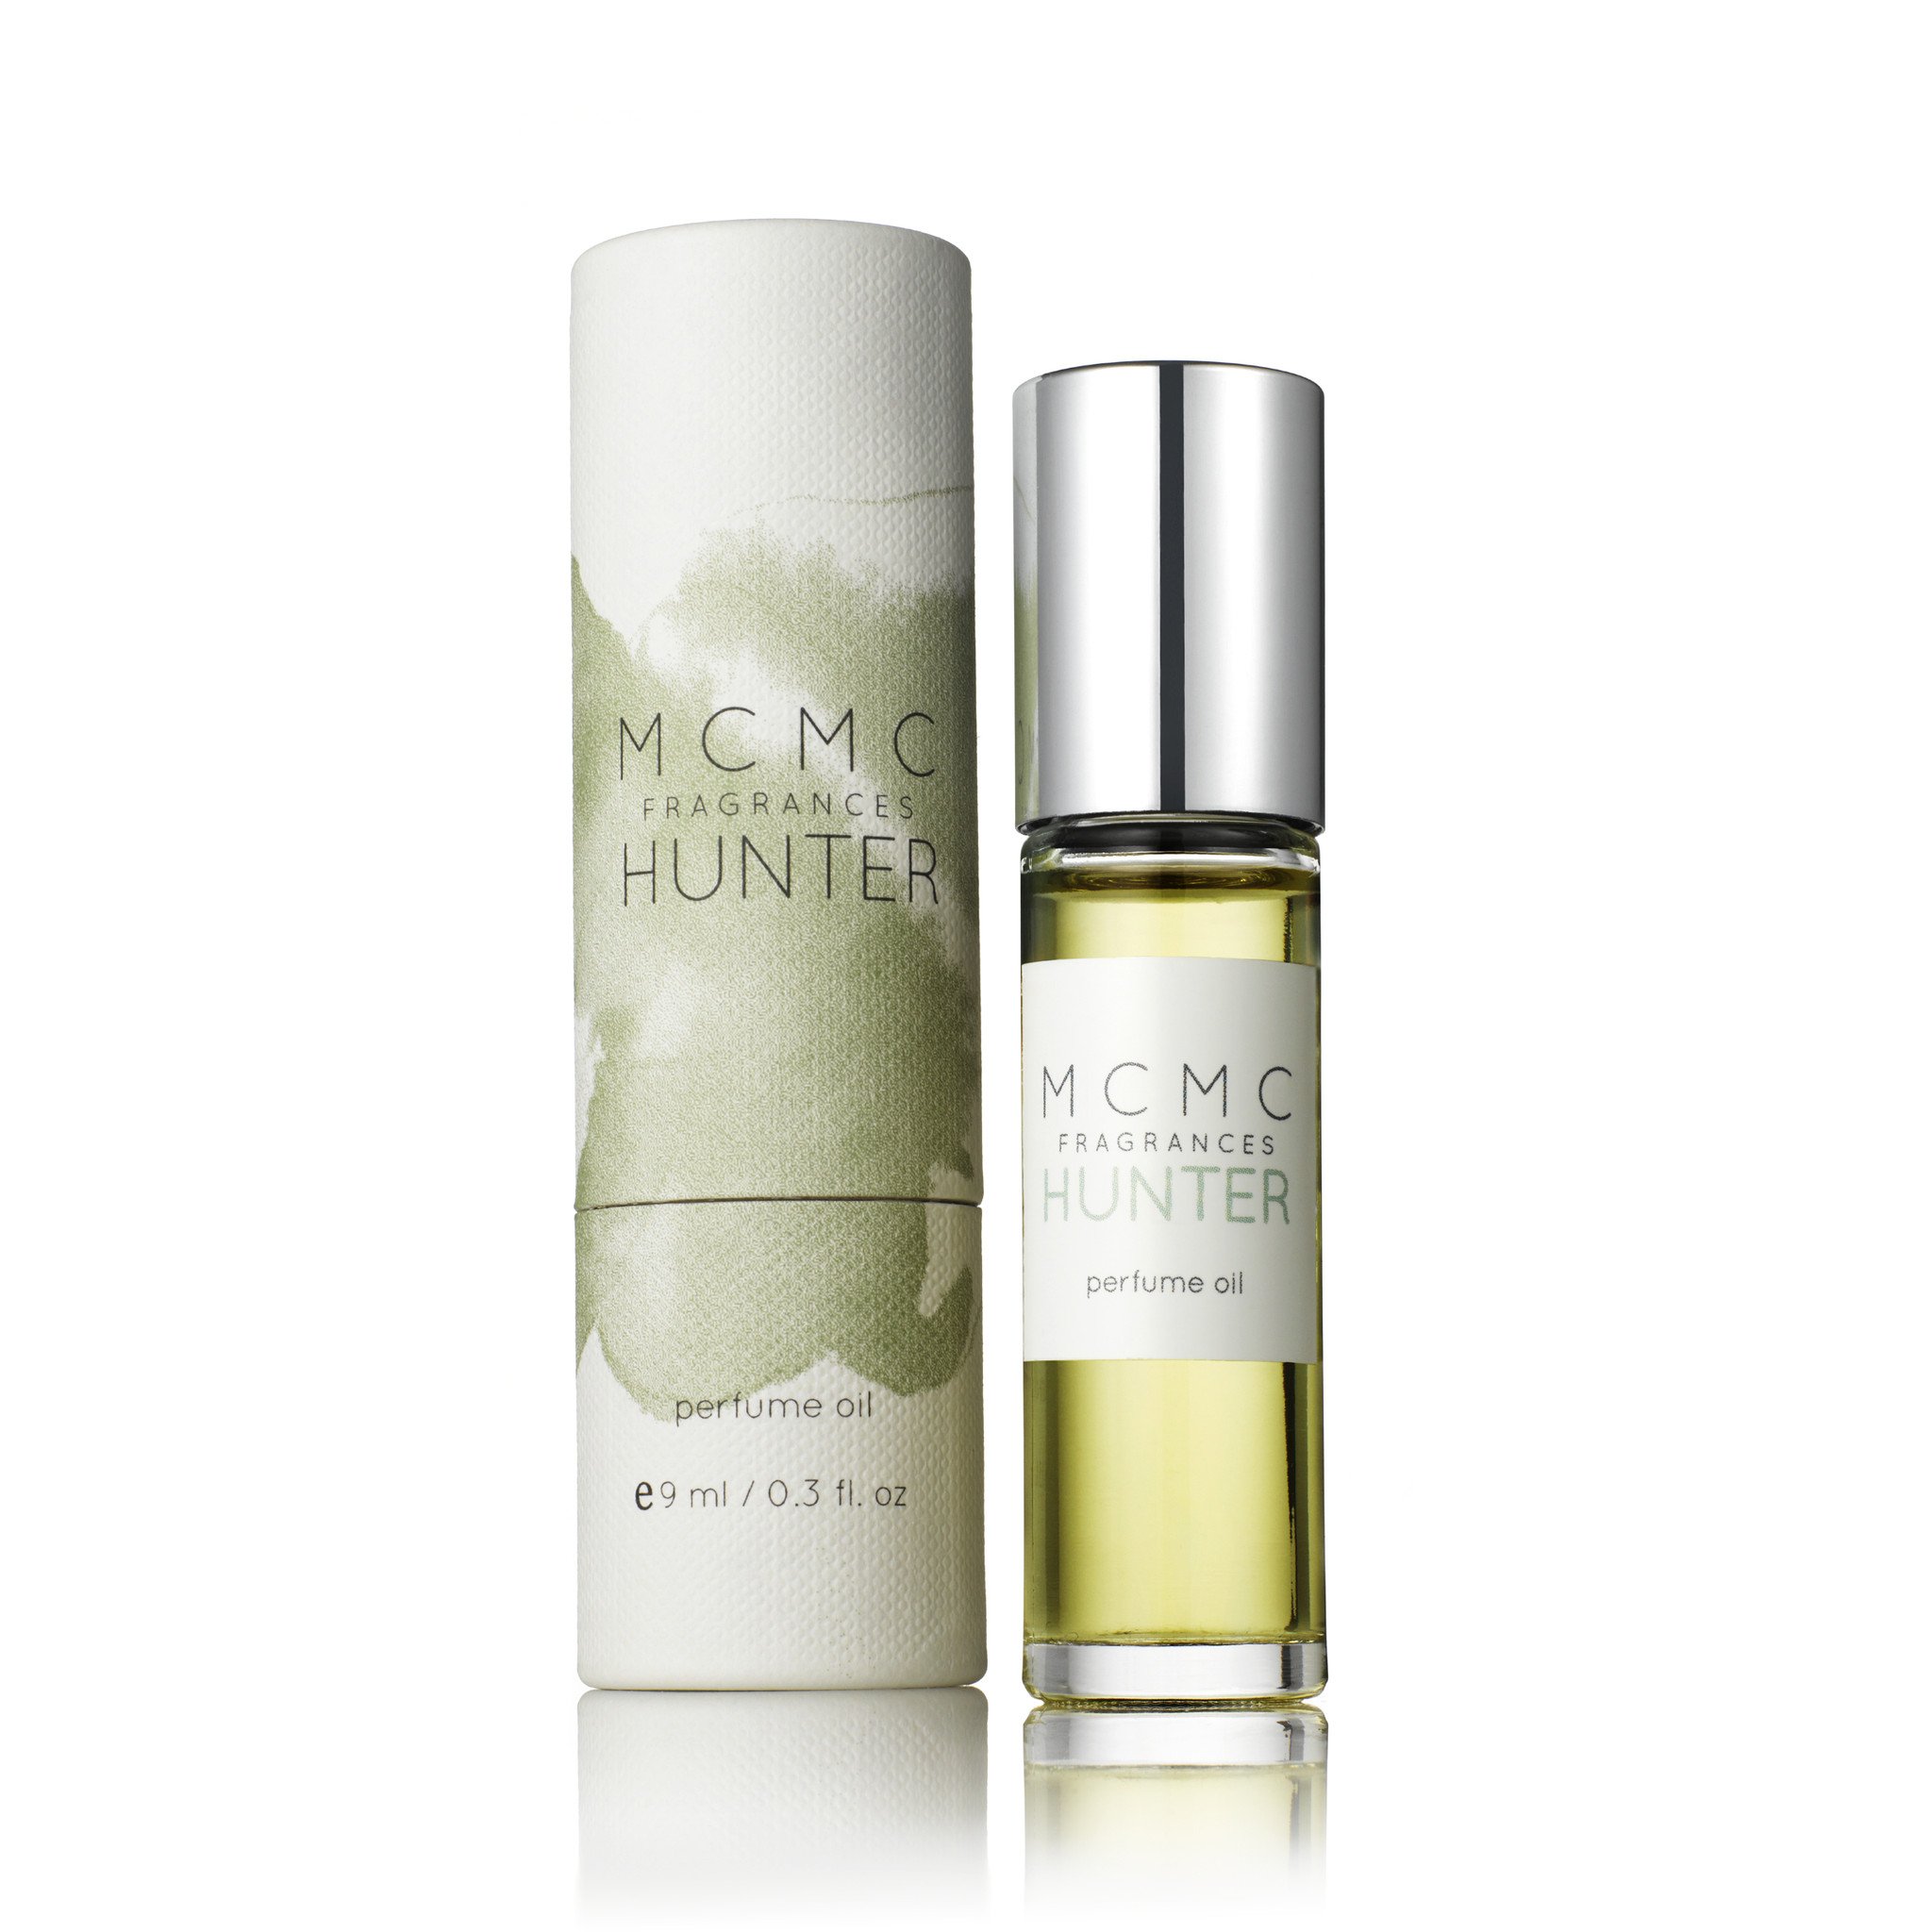 HUNTER 10ml perfume oil | MCMC Fragrances